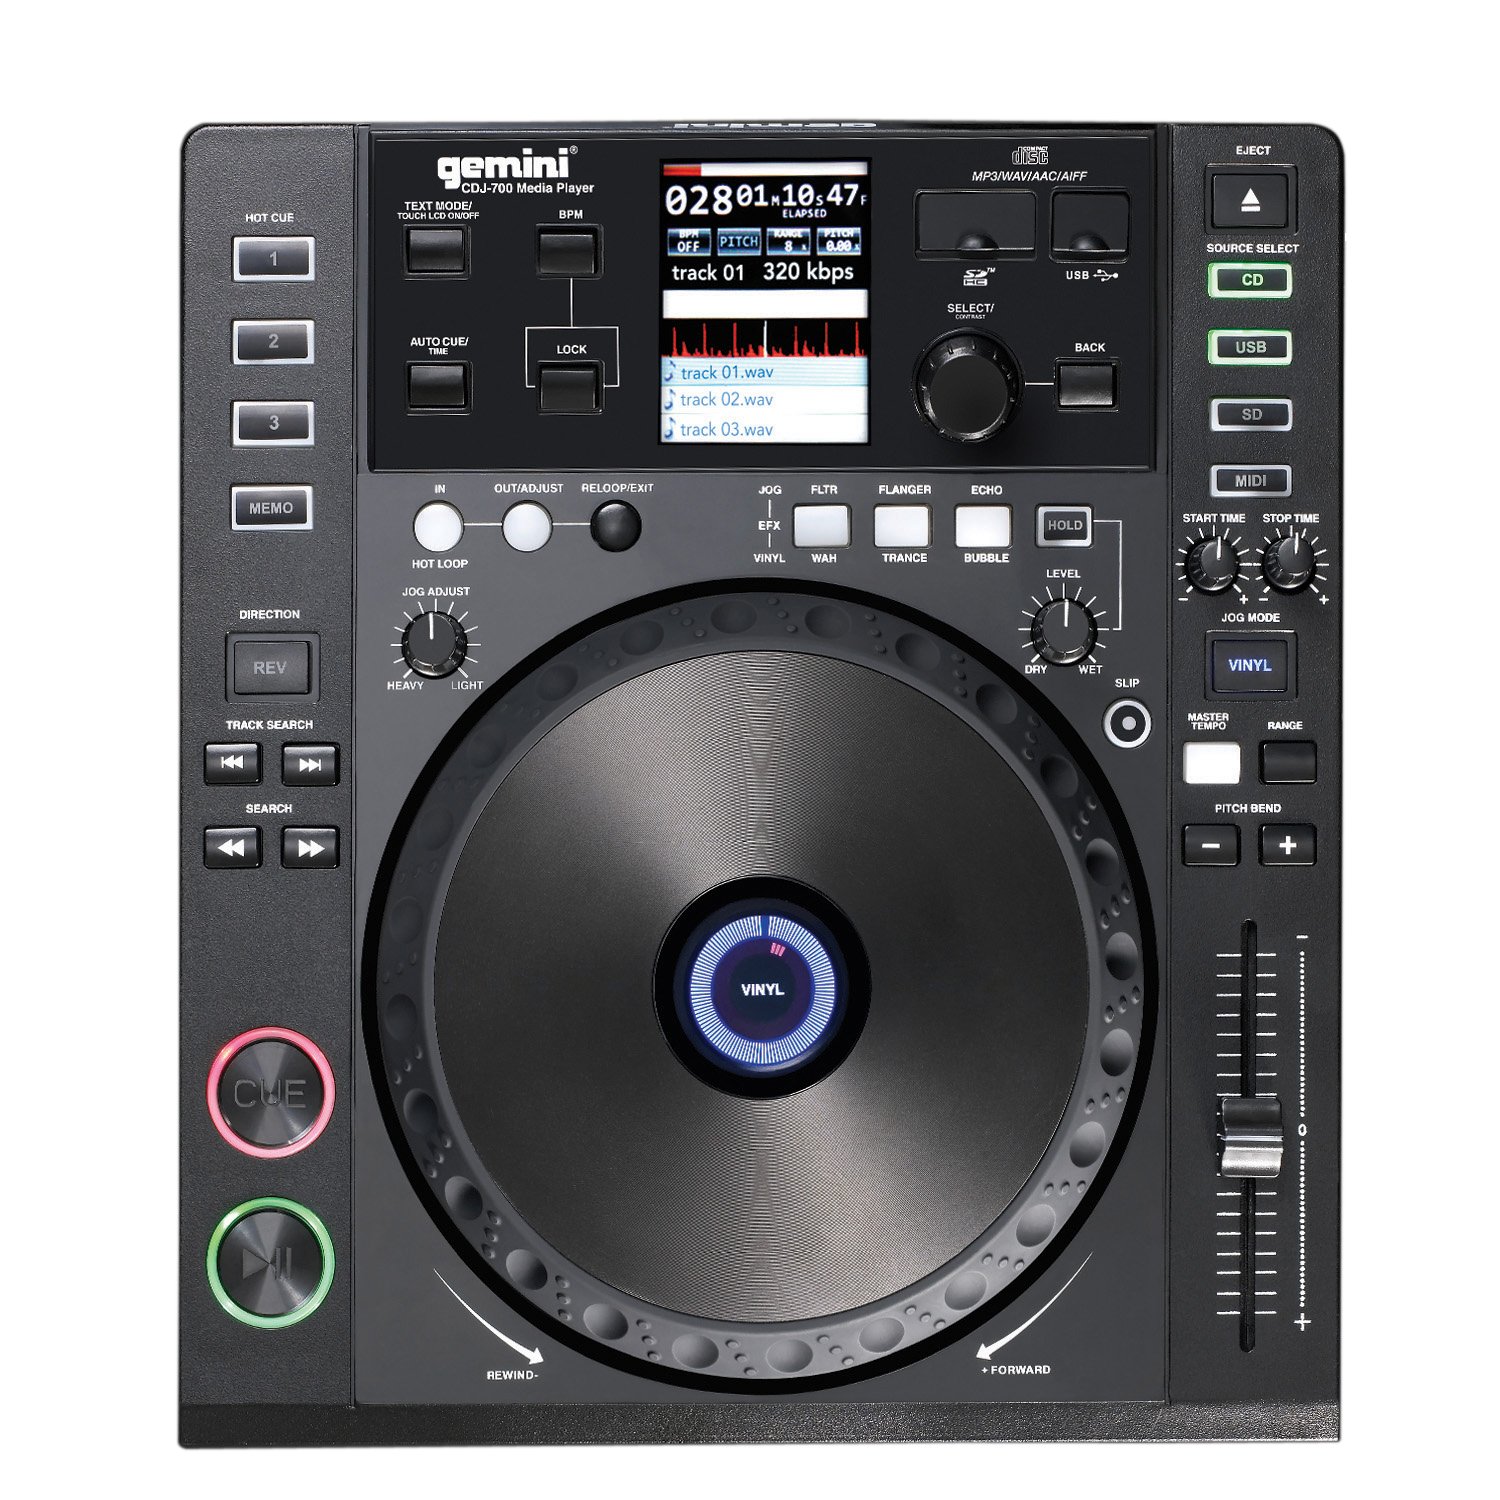 Gemini CDJ-700 Media Player Review - Digital DJ Tips